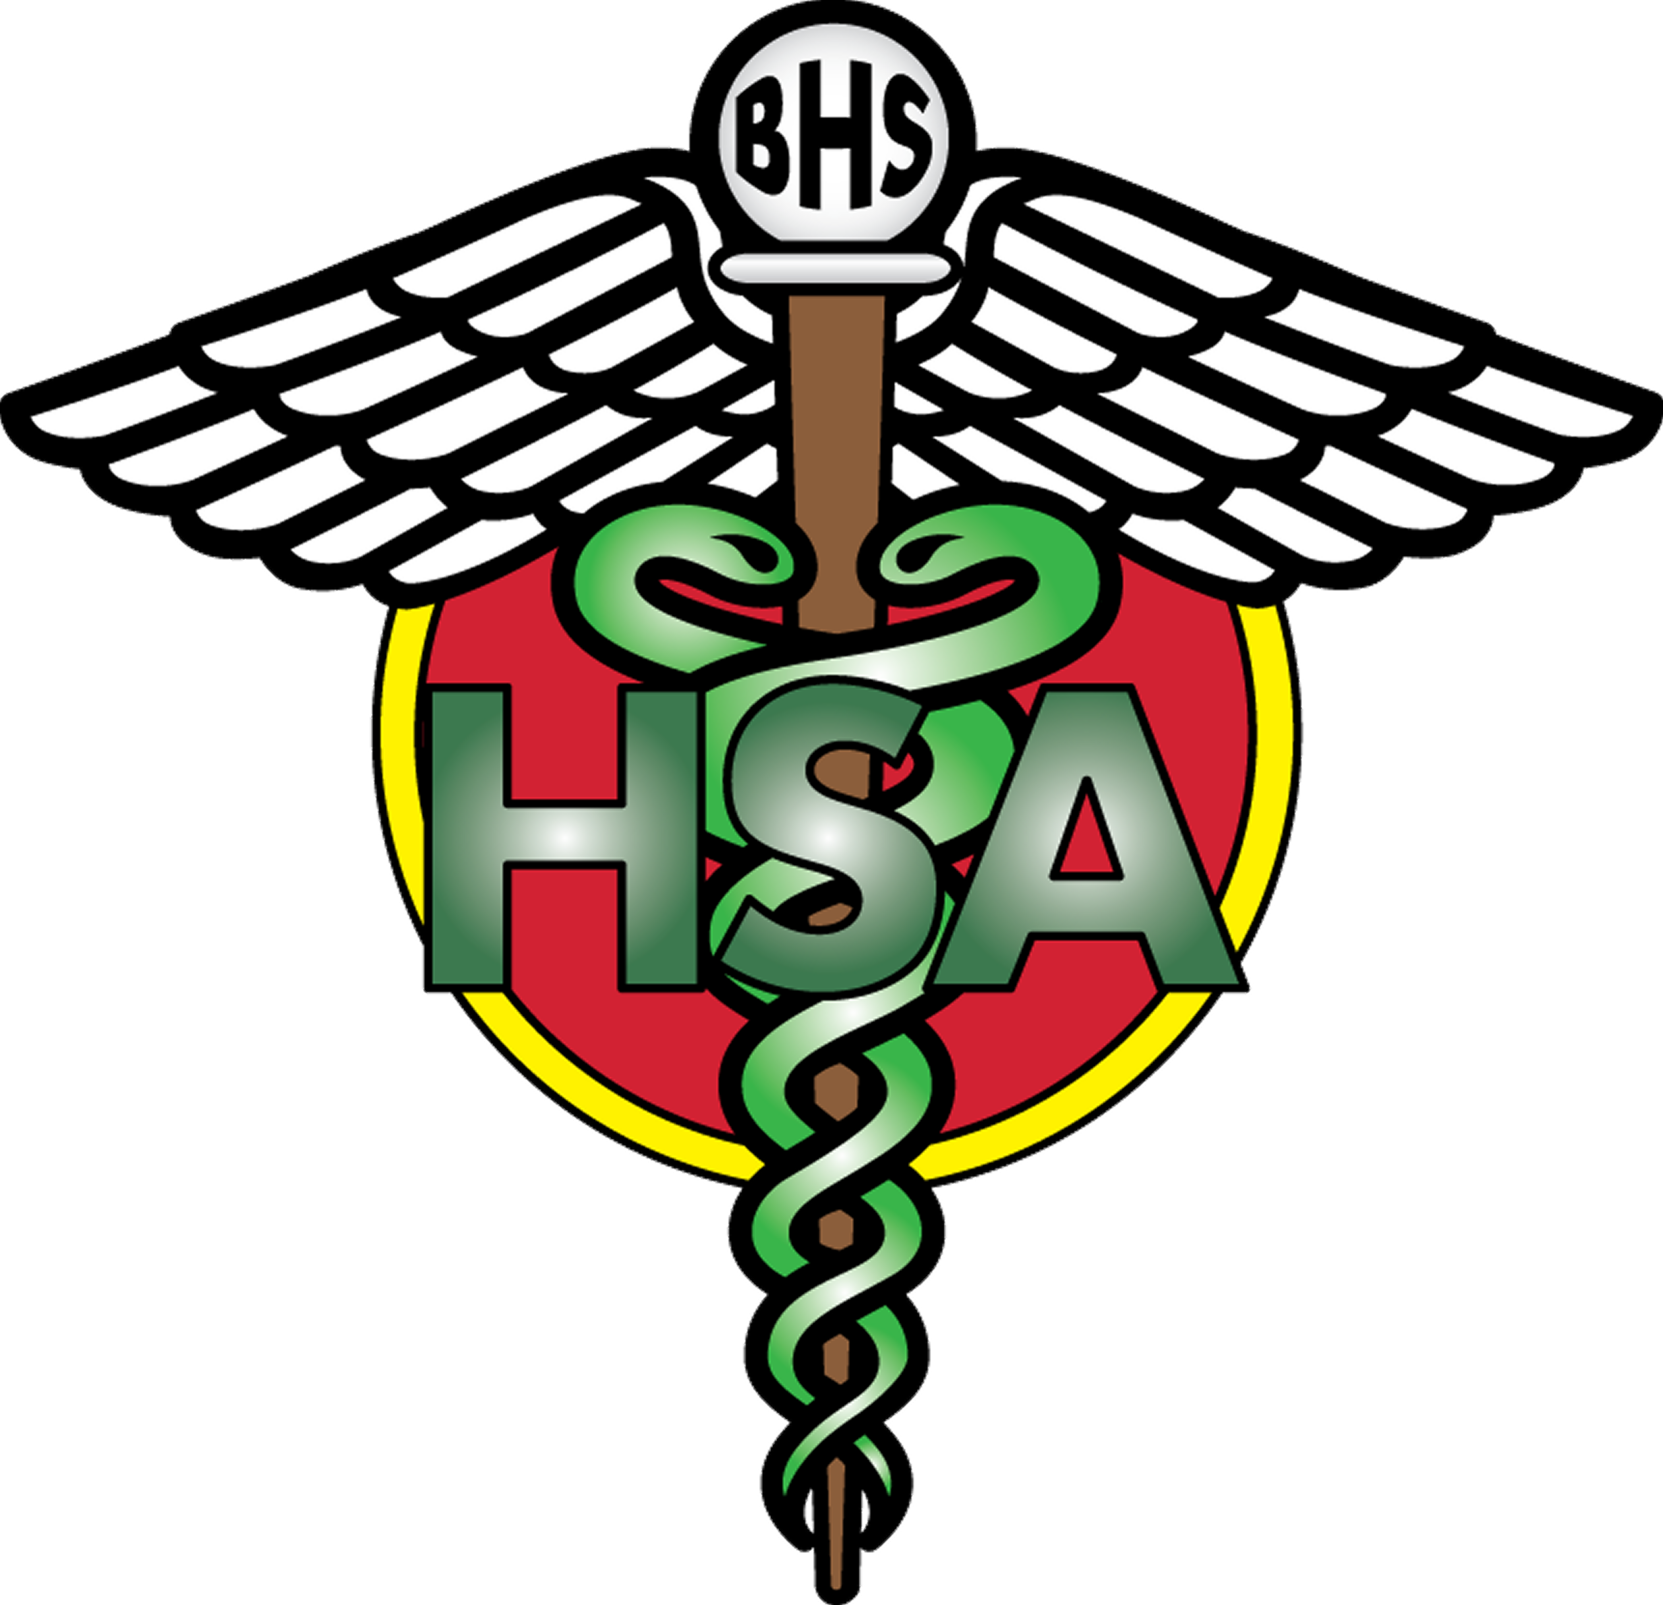 Bayside HSA logo 